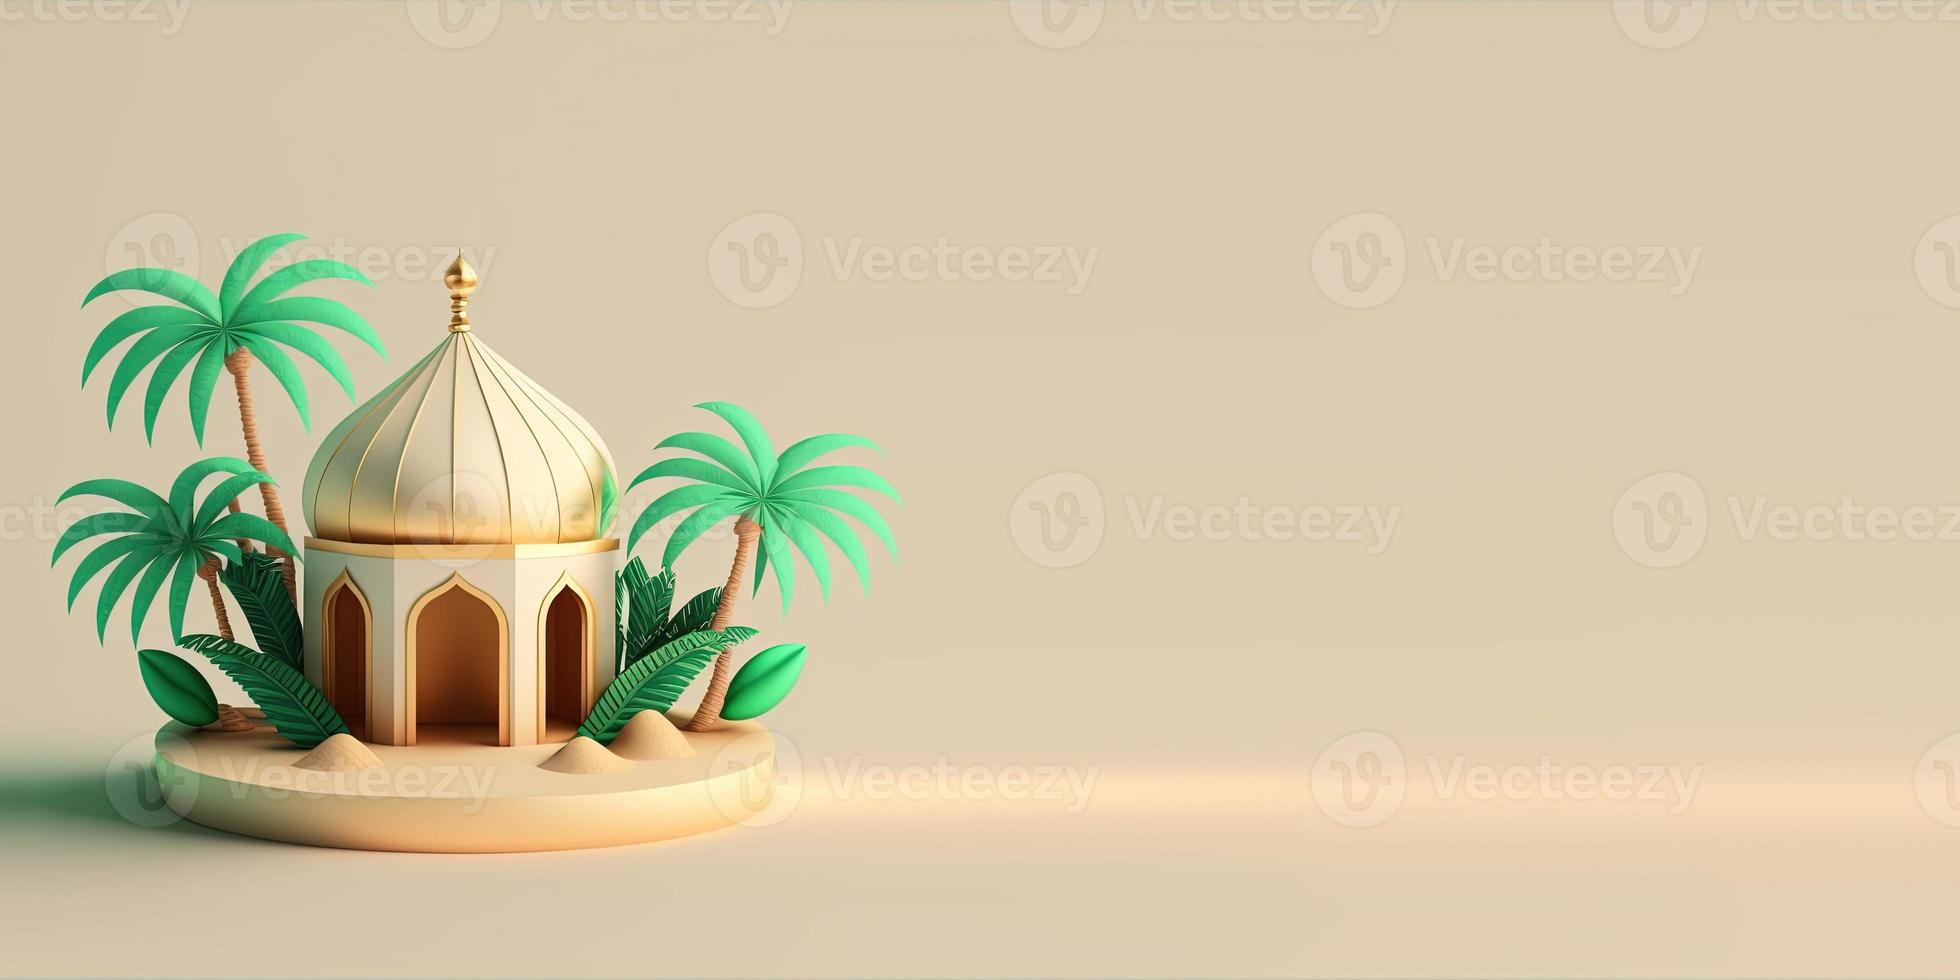 3D Mosque Illustration for Ramadan Greeting photo